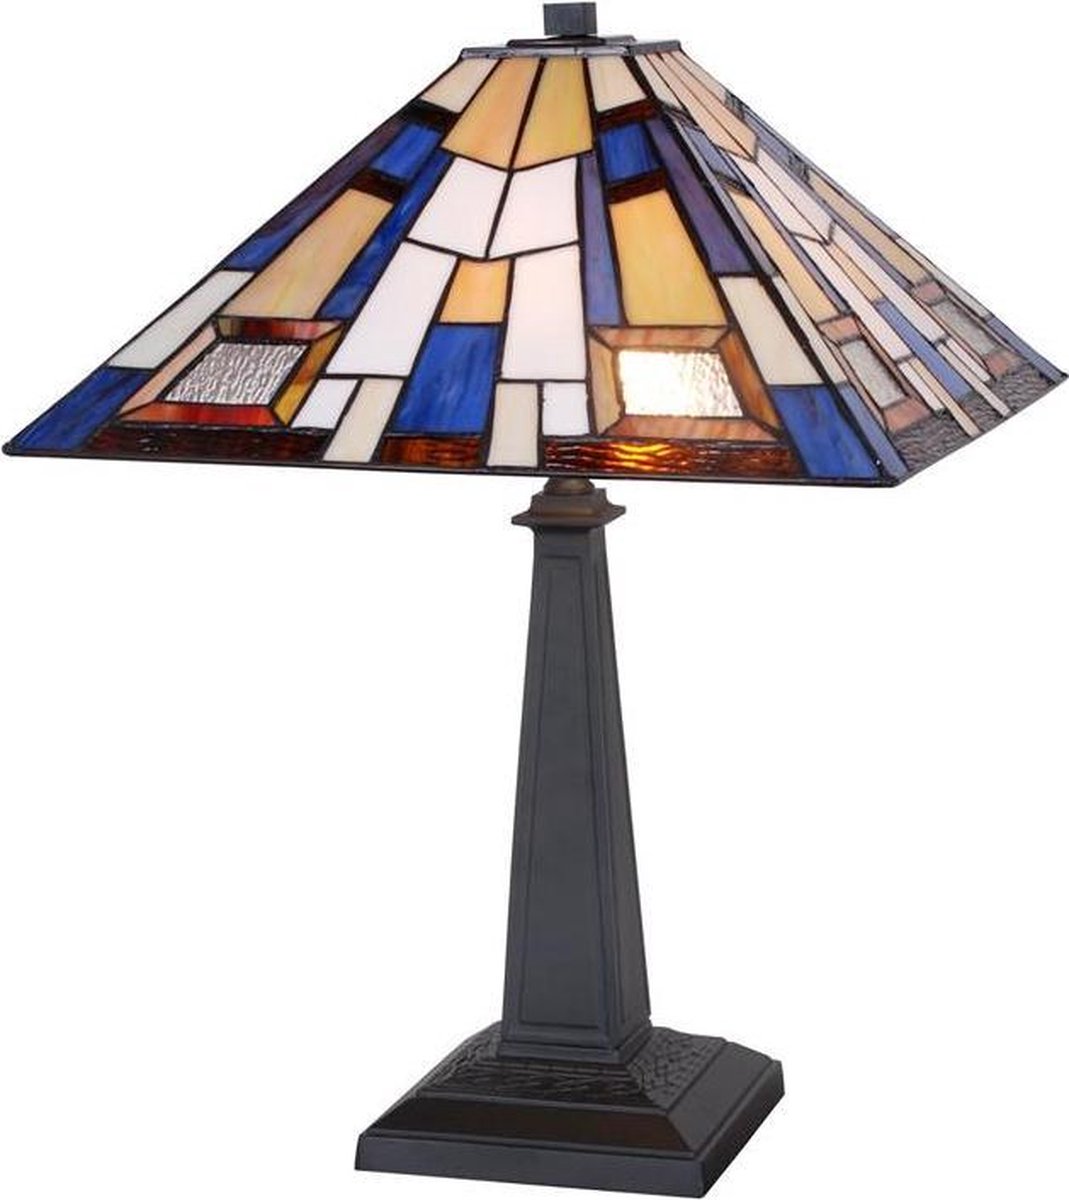 44 x 60 cm - Lampen - Tafellamp Tiffany Style - Glas in lood Design tafellamp